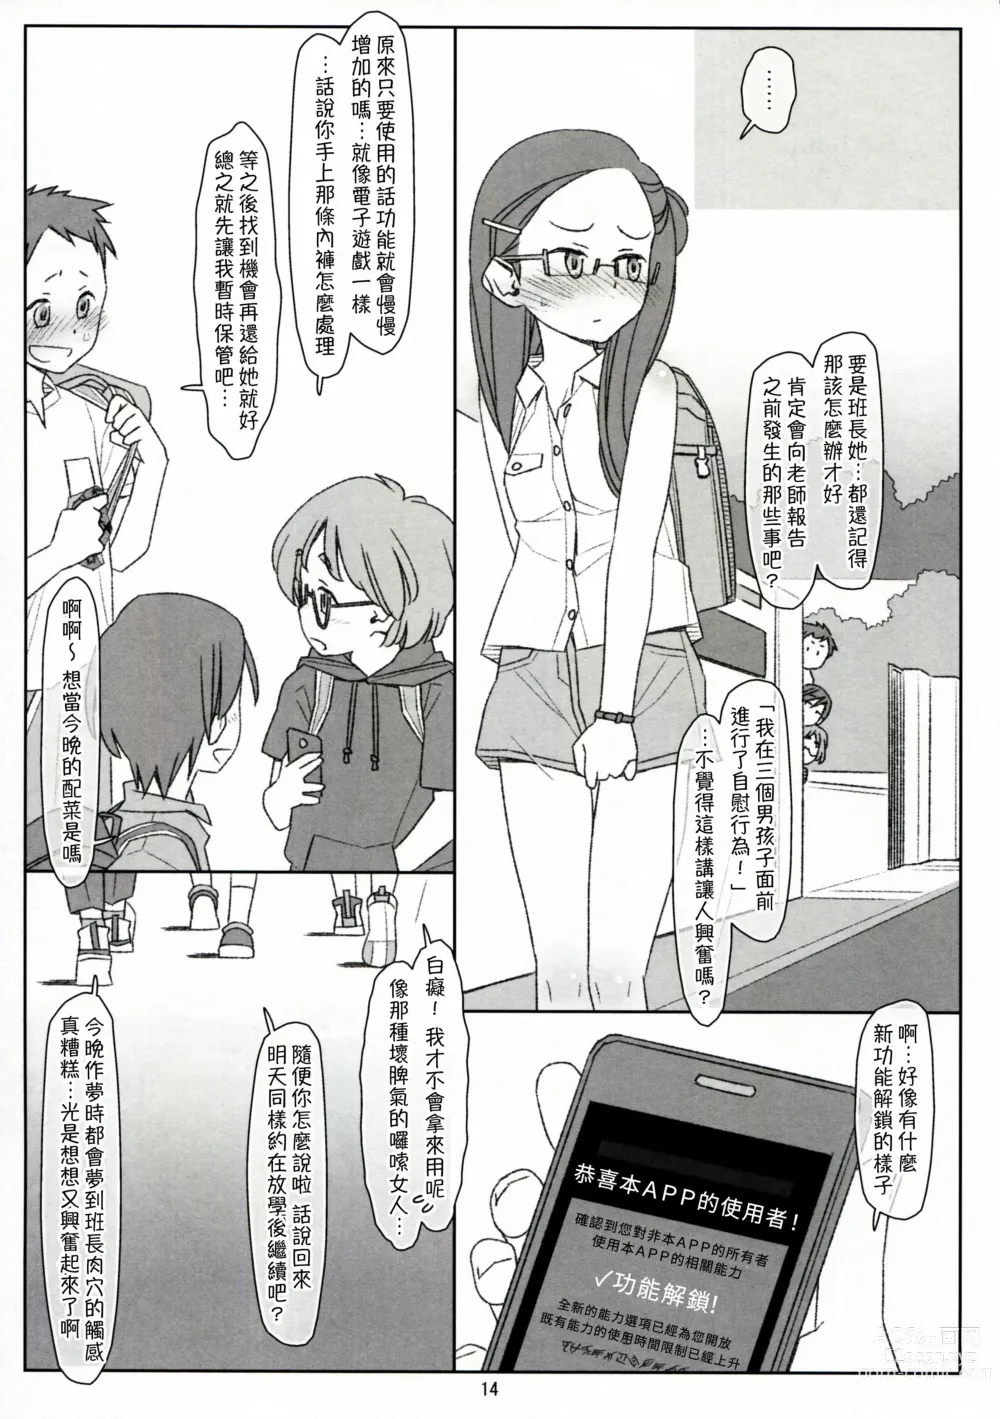 Page 14 of doujinshi Bokutachi no Super App + ②